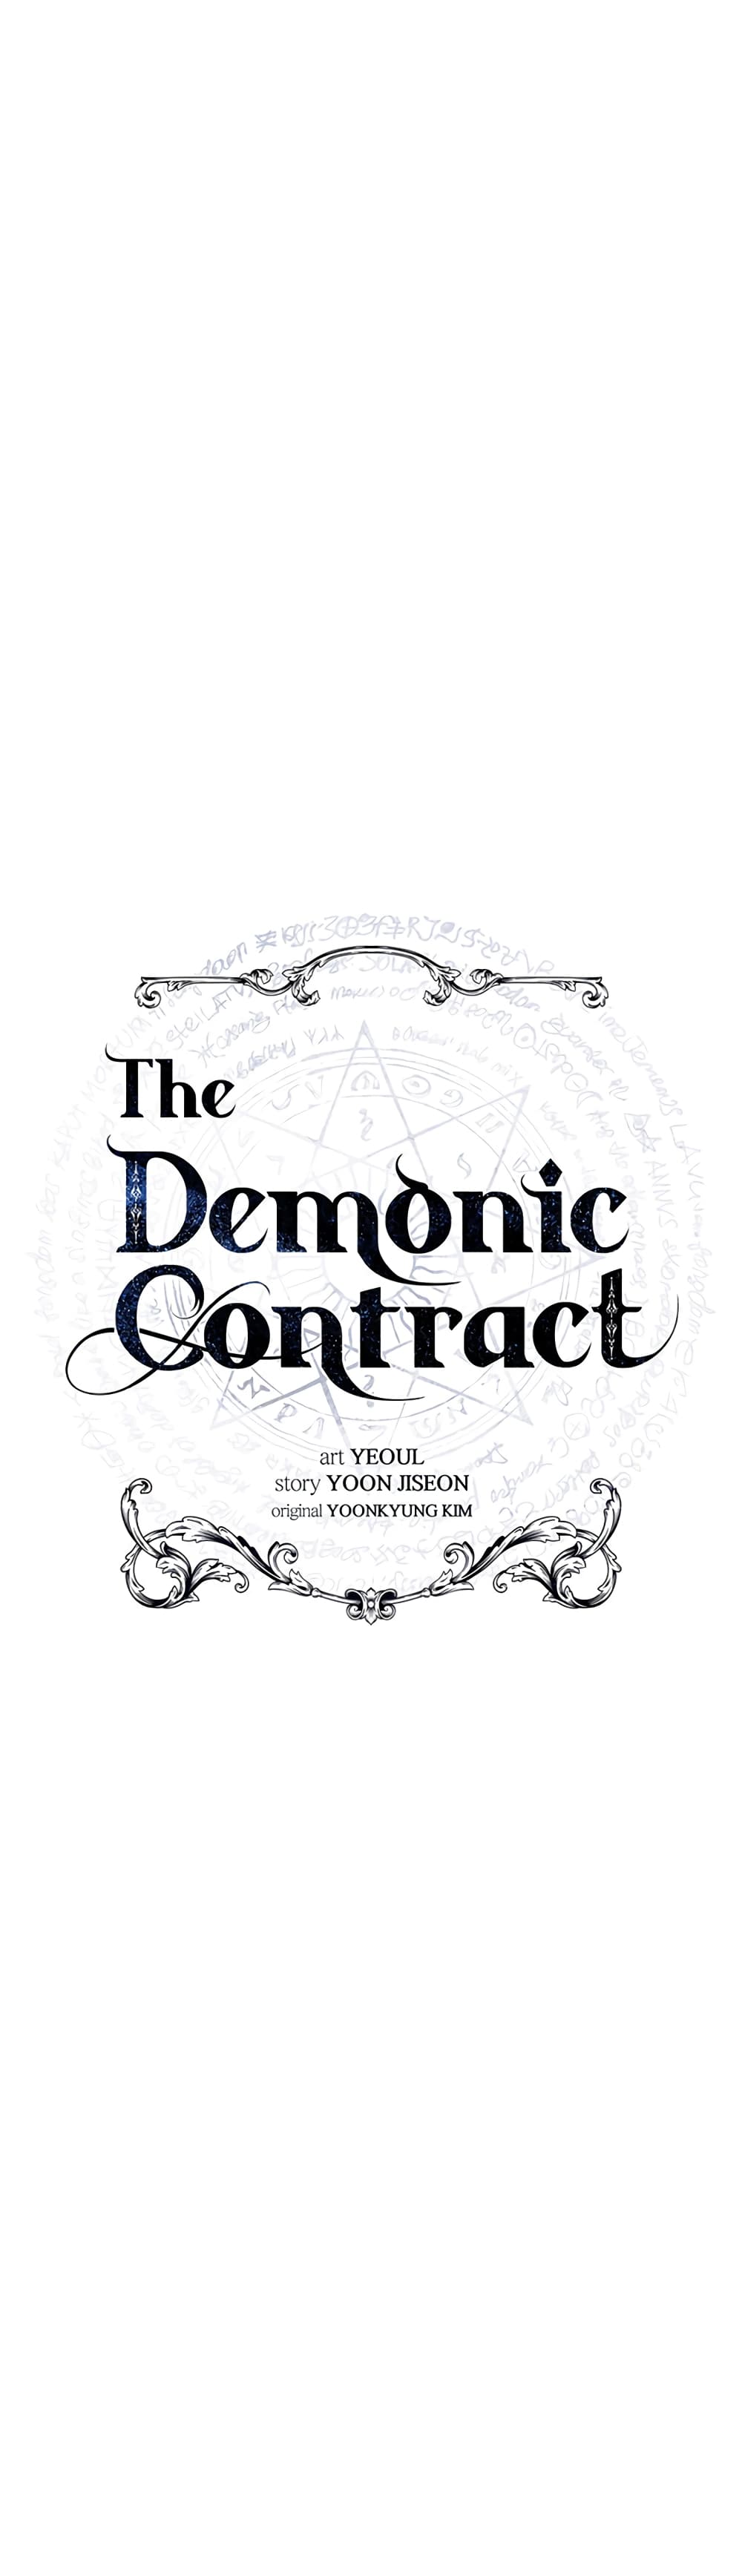 The Demonic Contract 39-39